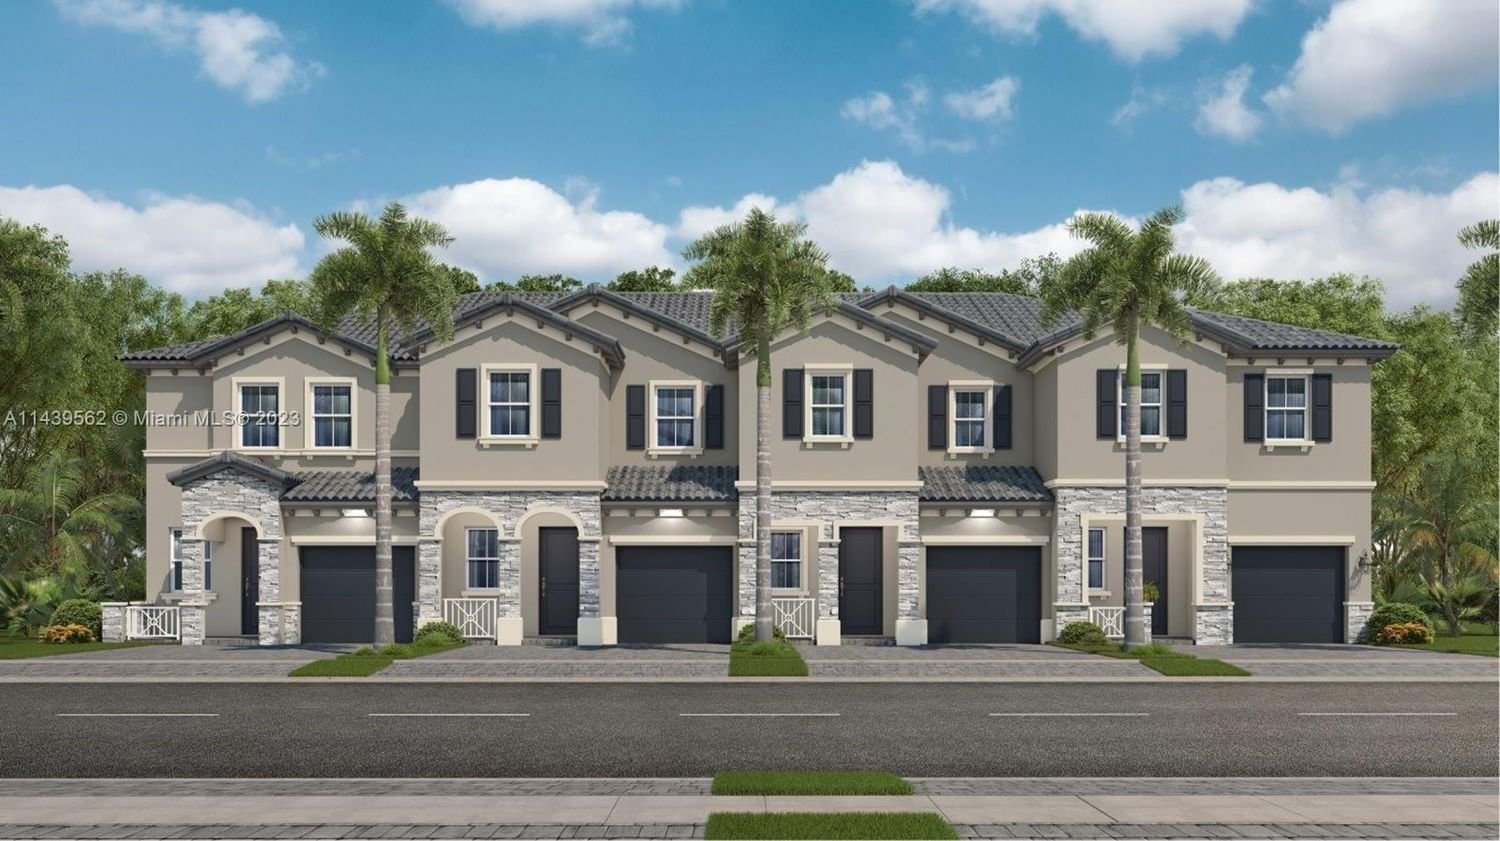 Real estate property located at 28855 162 CT, Miami-Dade County, Cedar Pointe, Homestead, FL